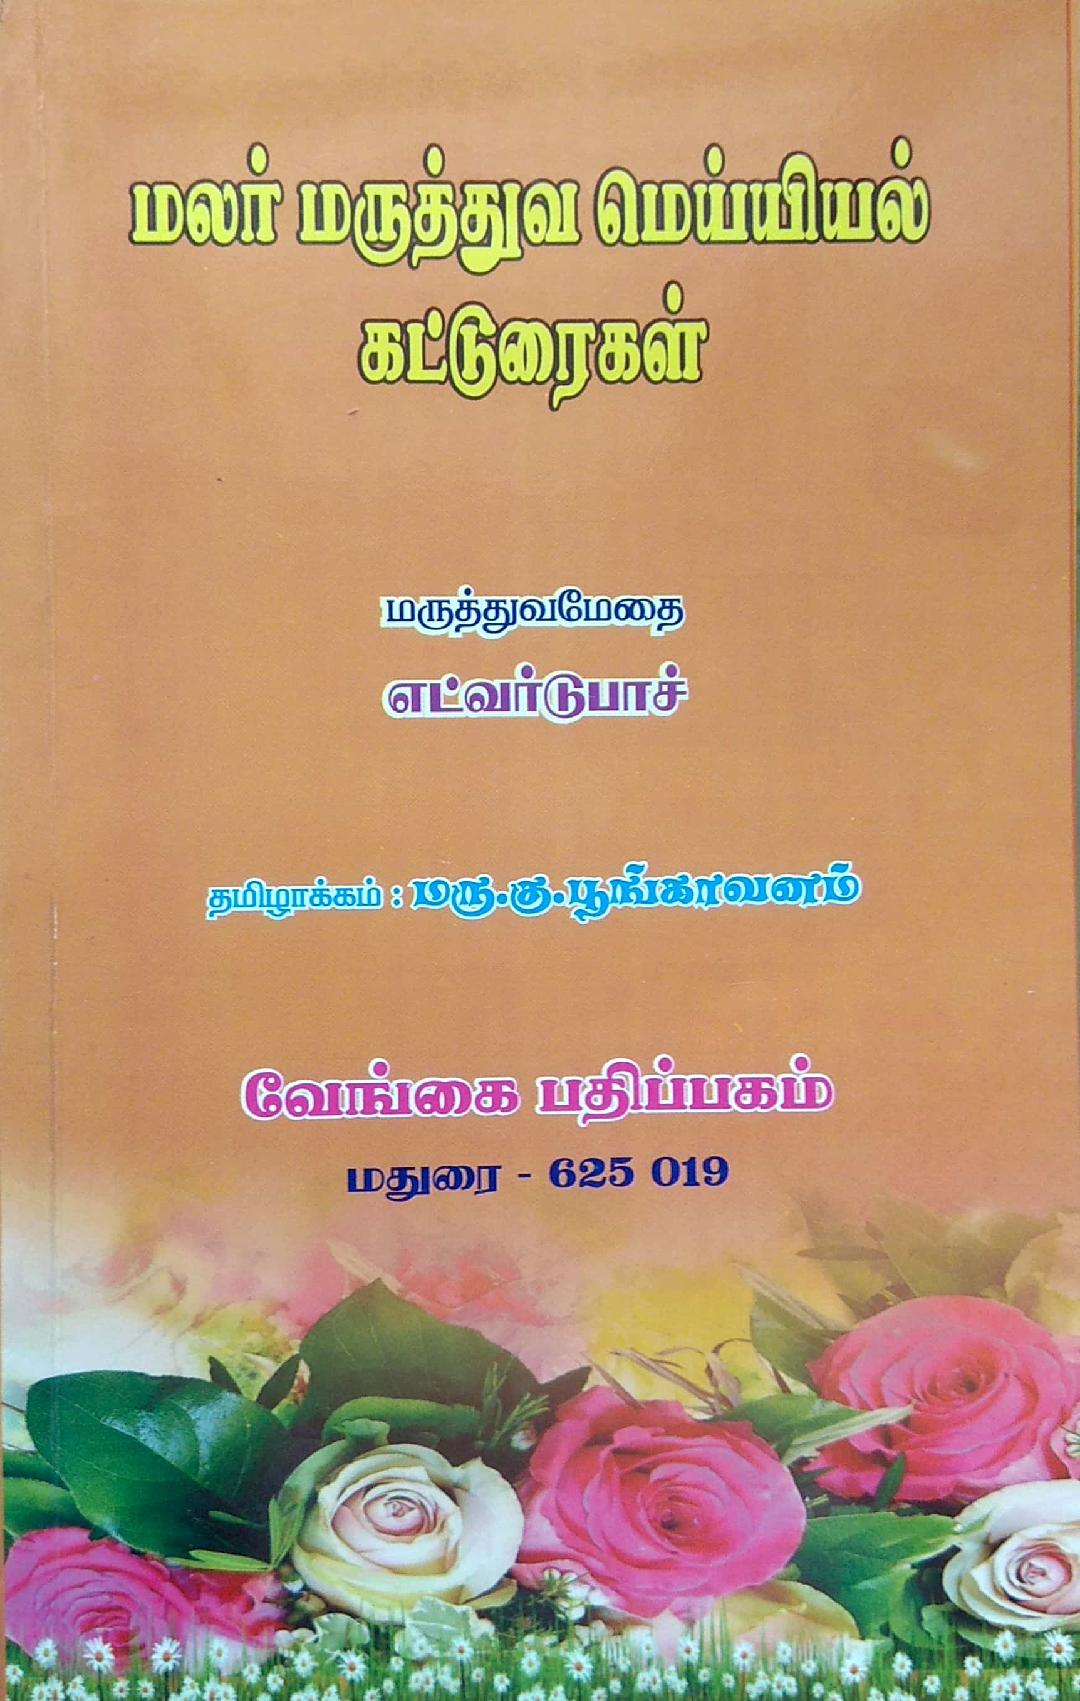 Bach flower remedies book in tamil pdf